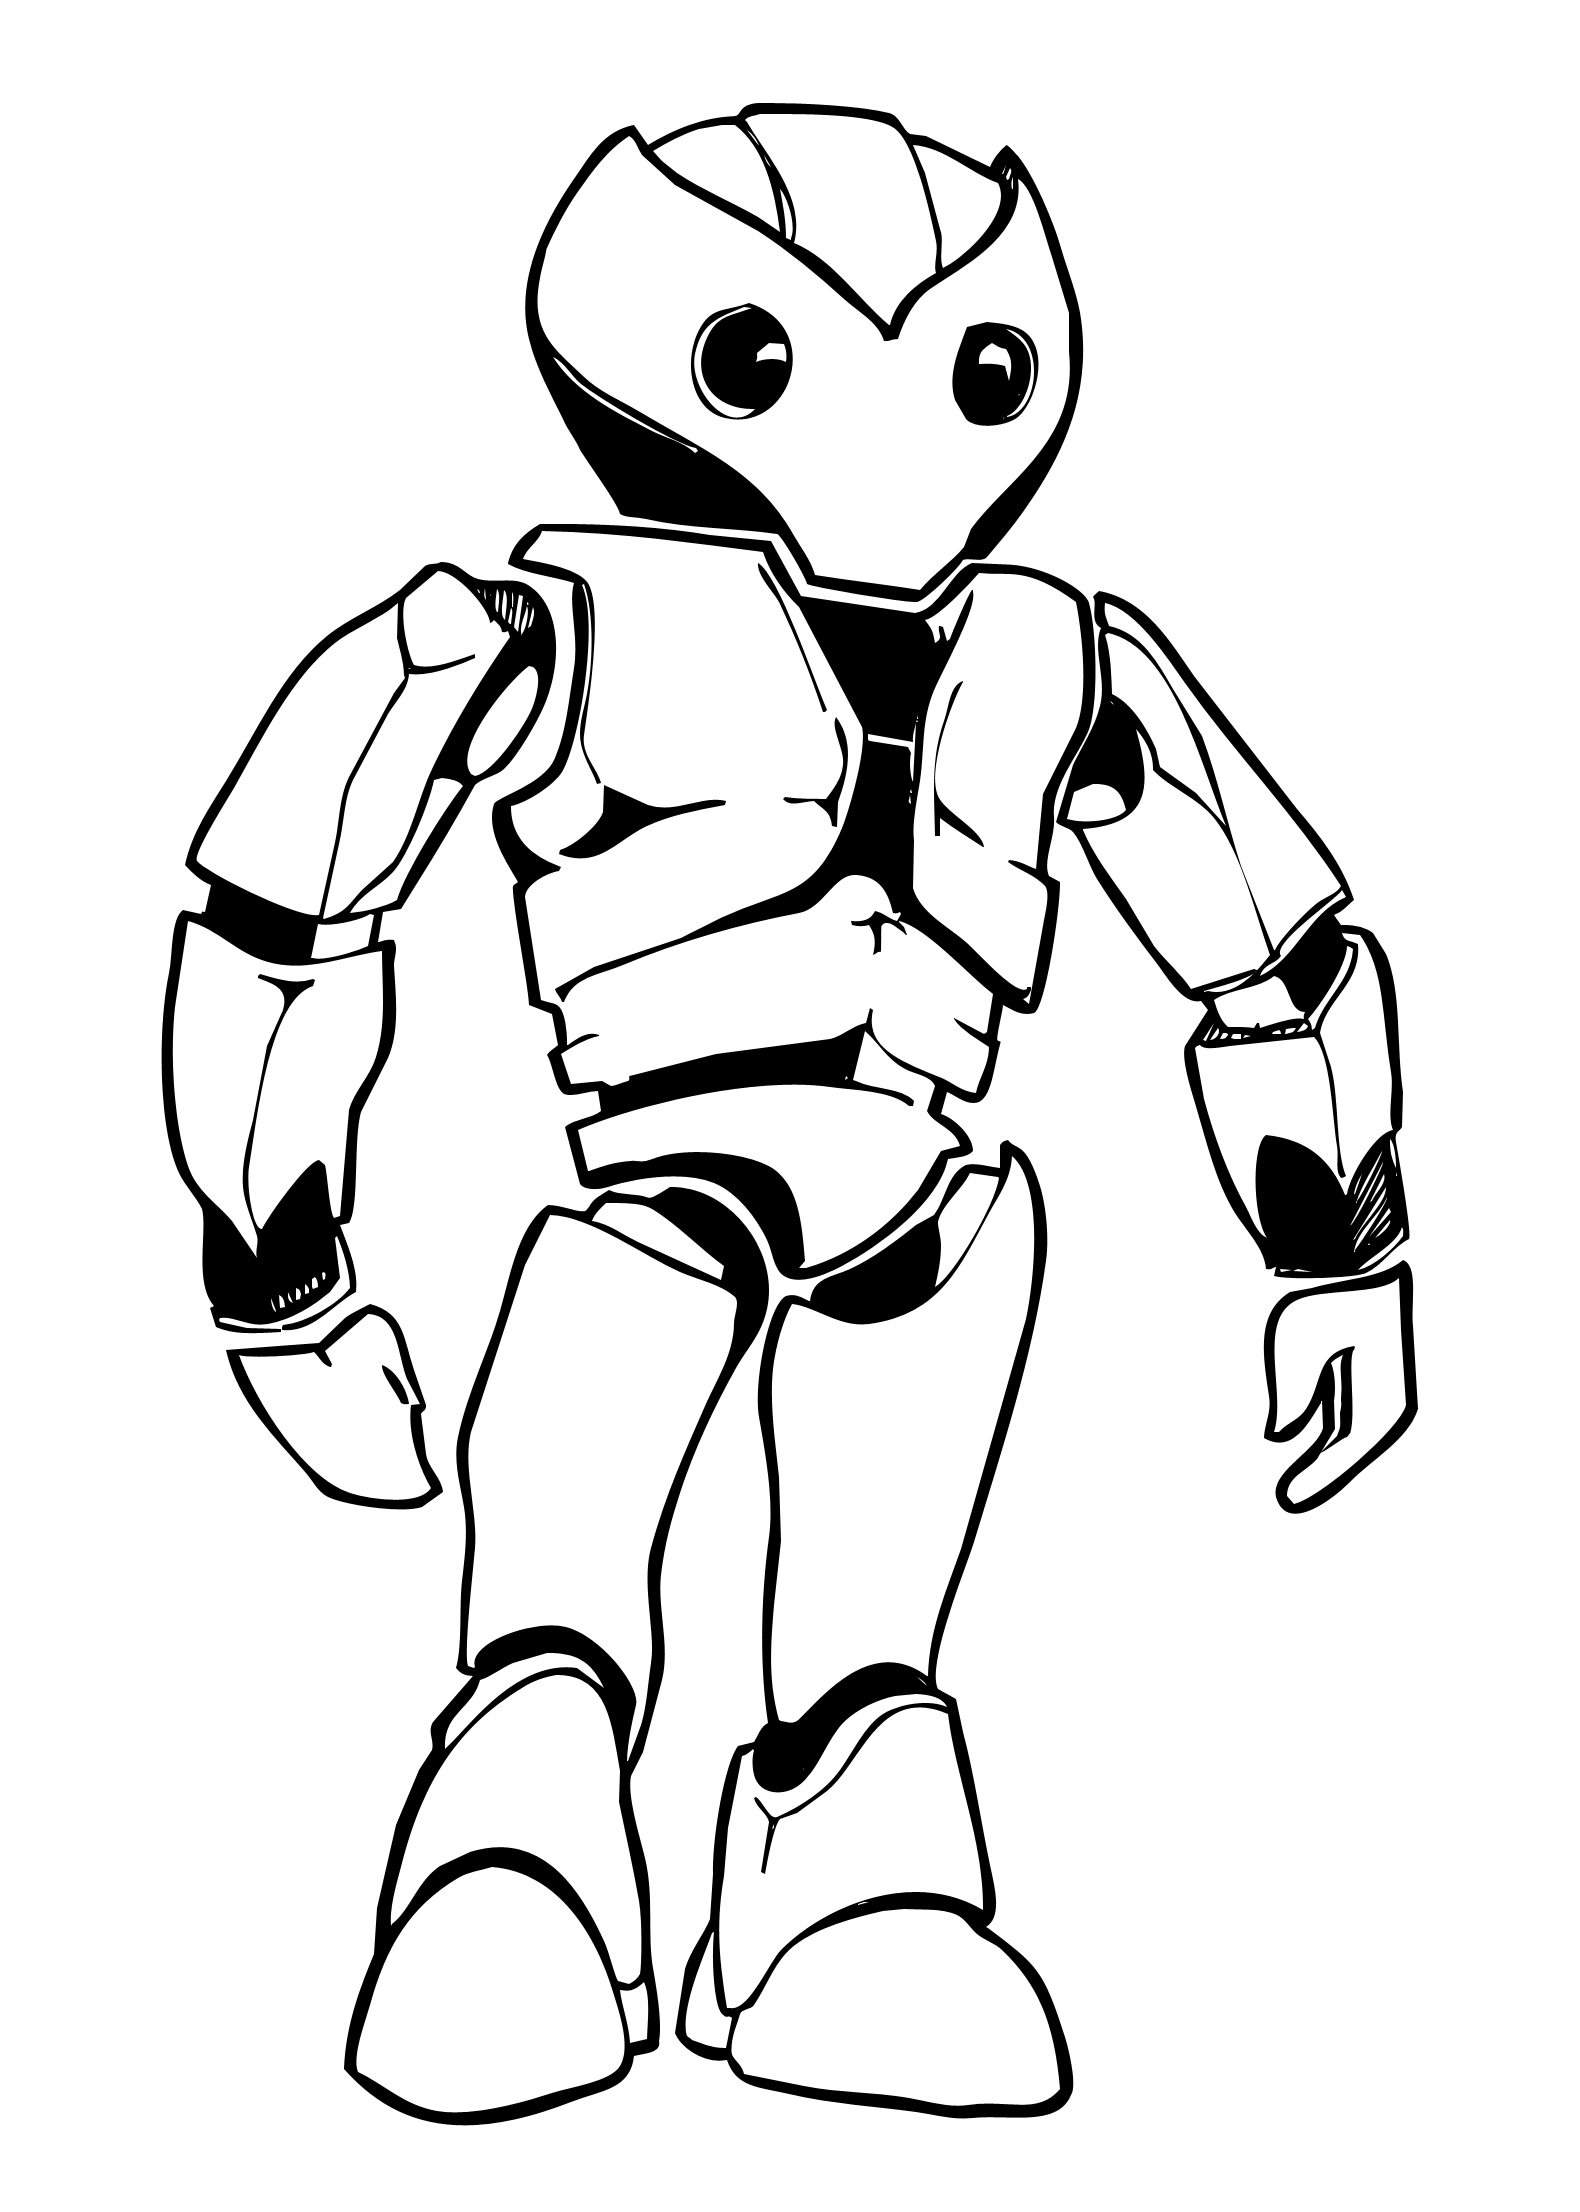 Cool Robot Drawing Sketch